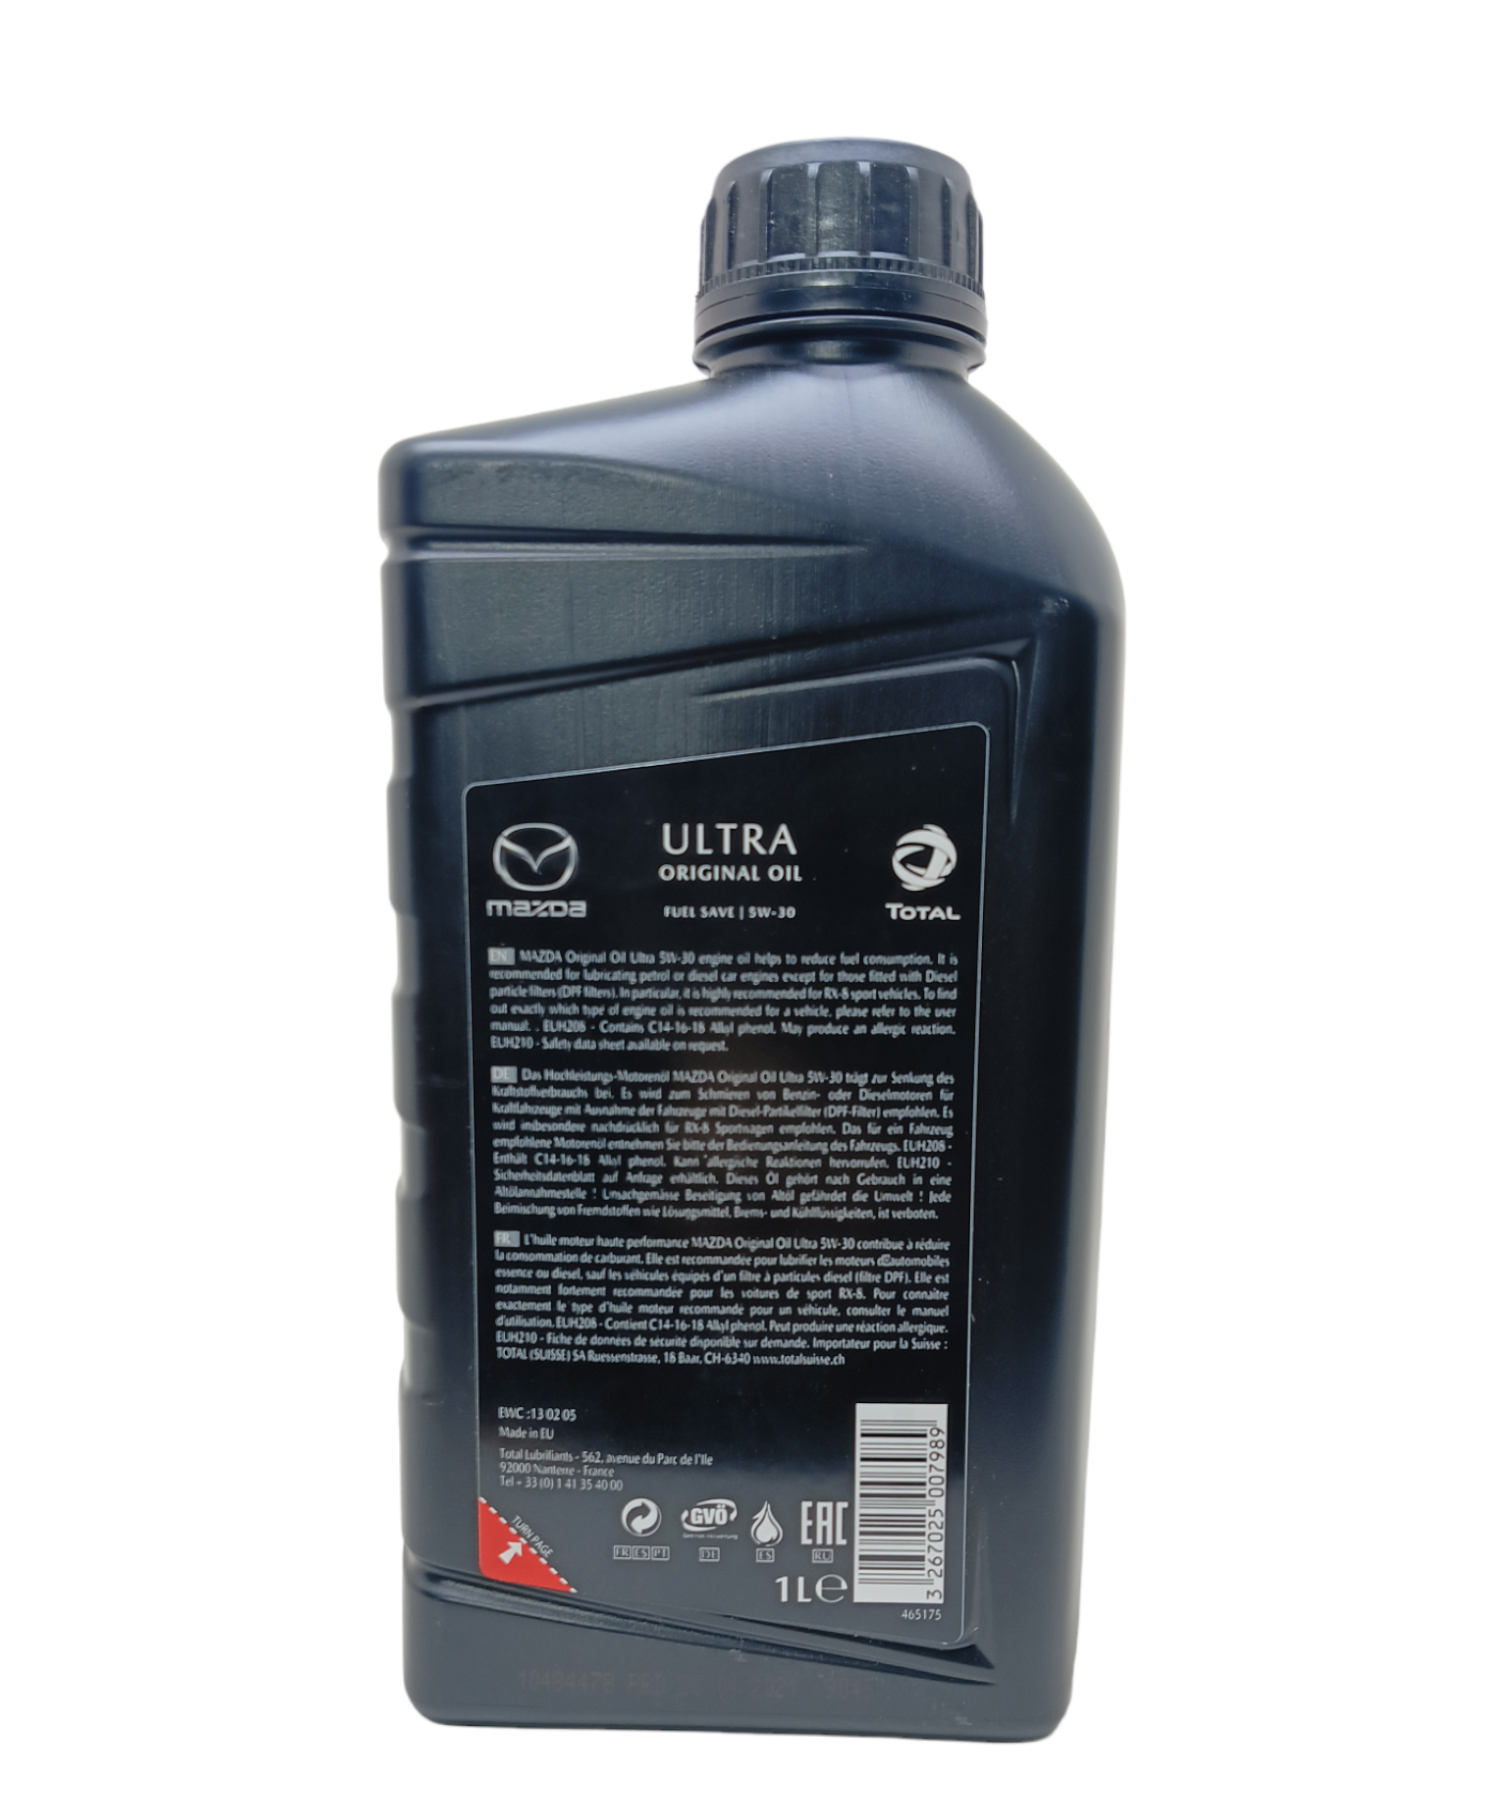 Синтетическое моторное масло Mazda Original Oil Ultra DPF 5W-30